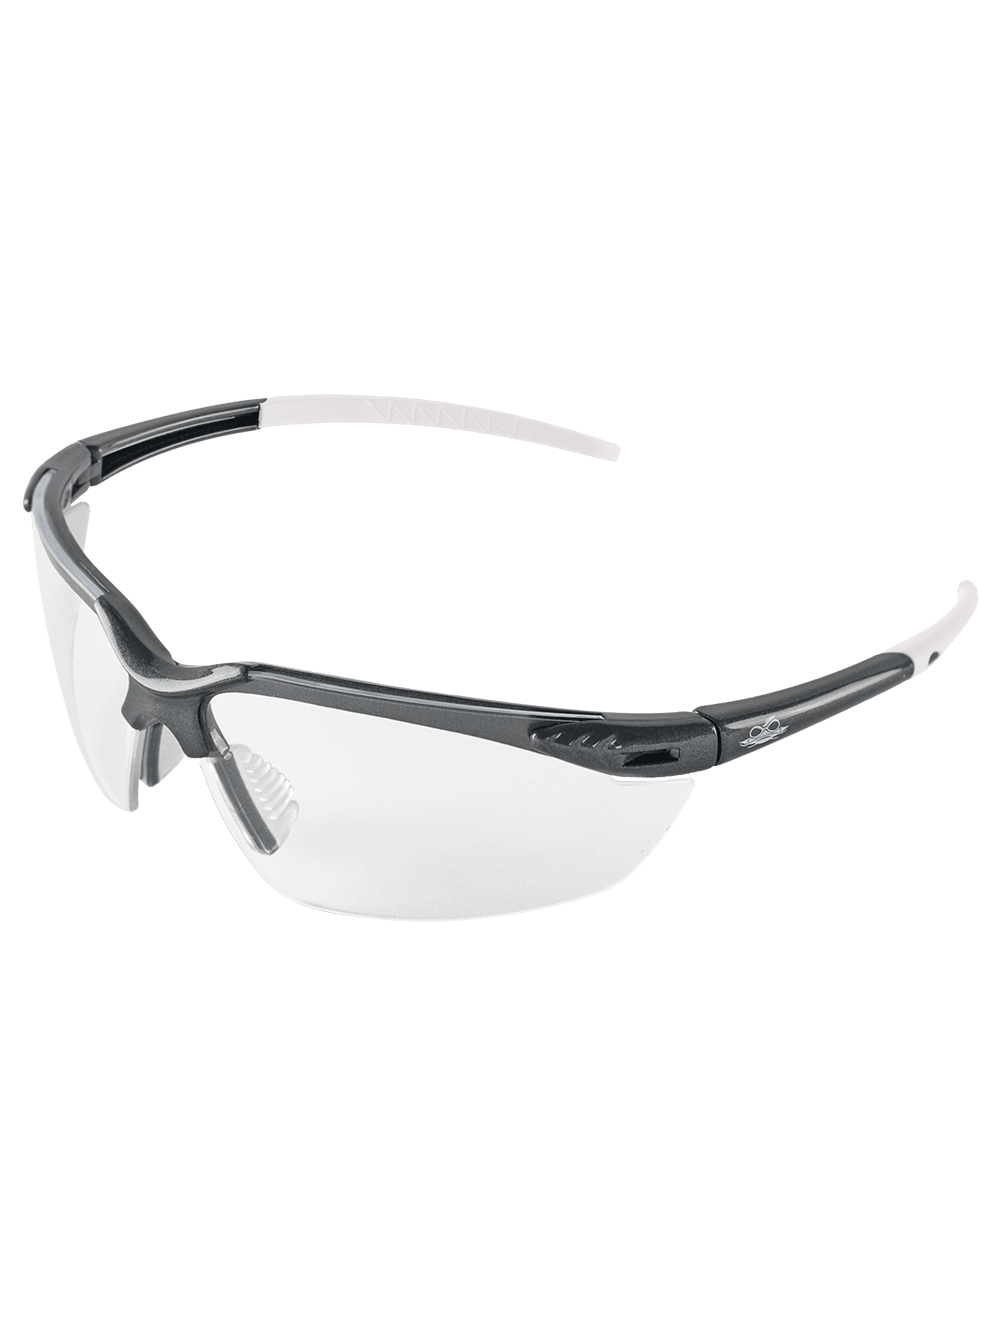 Mojarra® Clear Anti-Fog Lens, Shiny Pearl Gray Frame Safety Glasses - BH1191AF